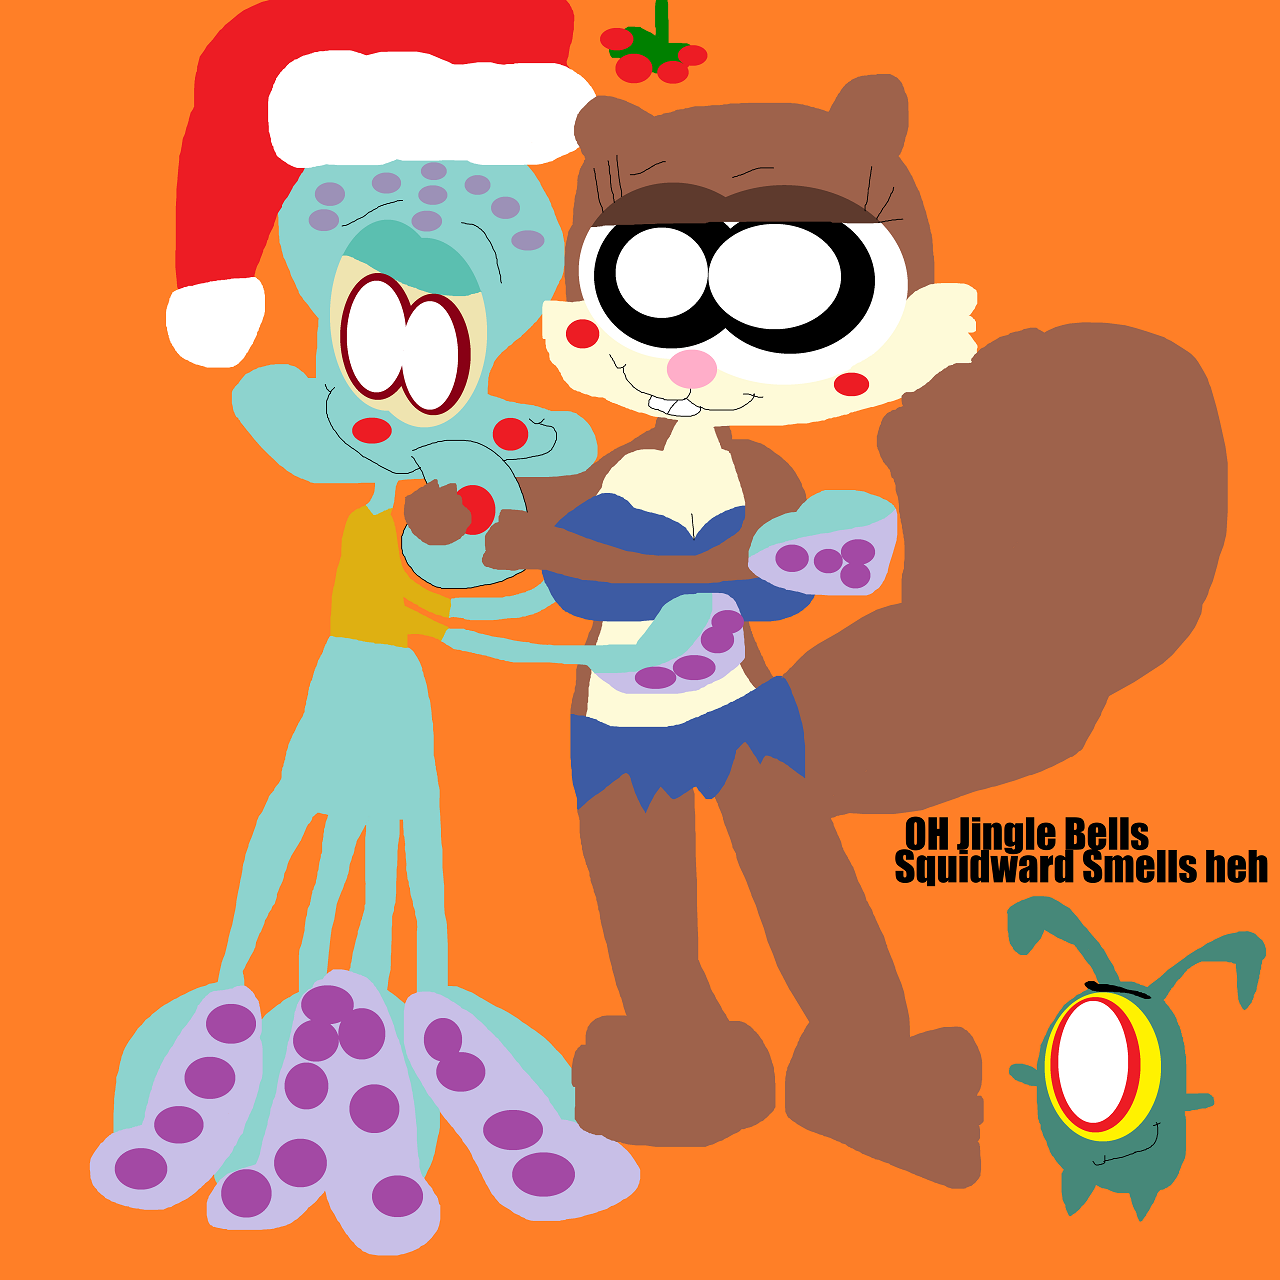 Oh Jingle Bells Squidward Smells^^ by Falconlobo